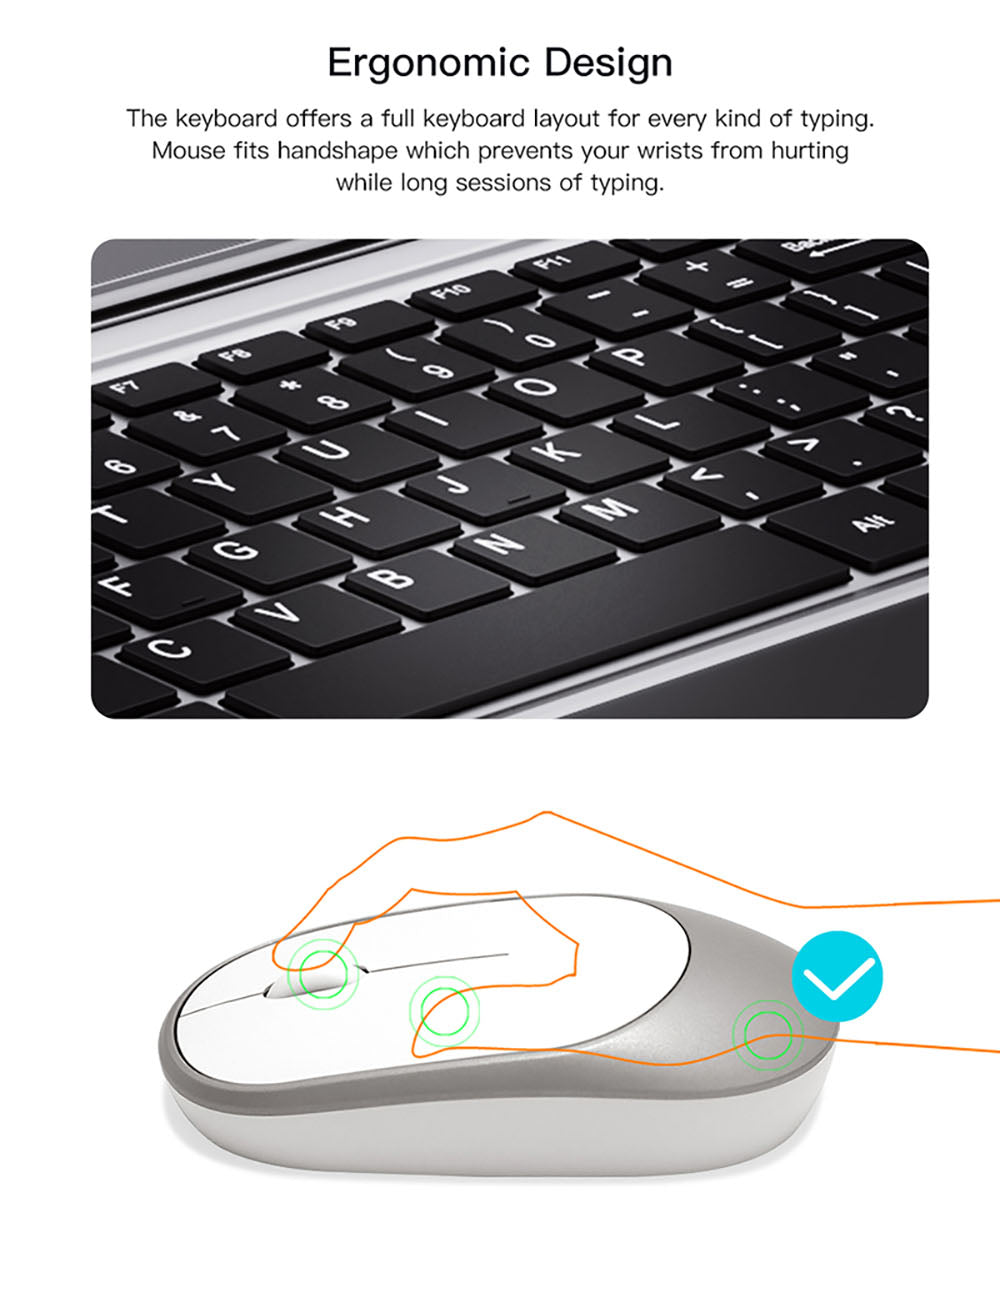 ergonomic design of keyboard